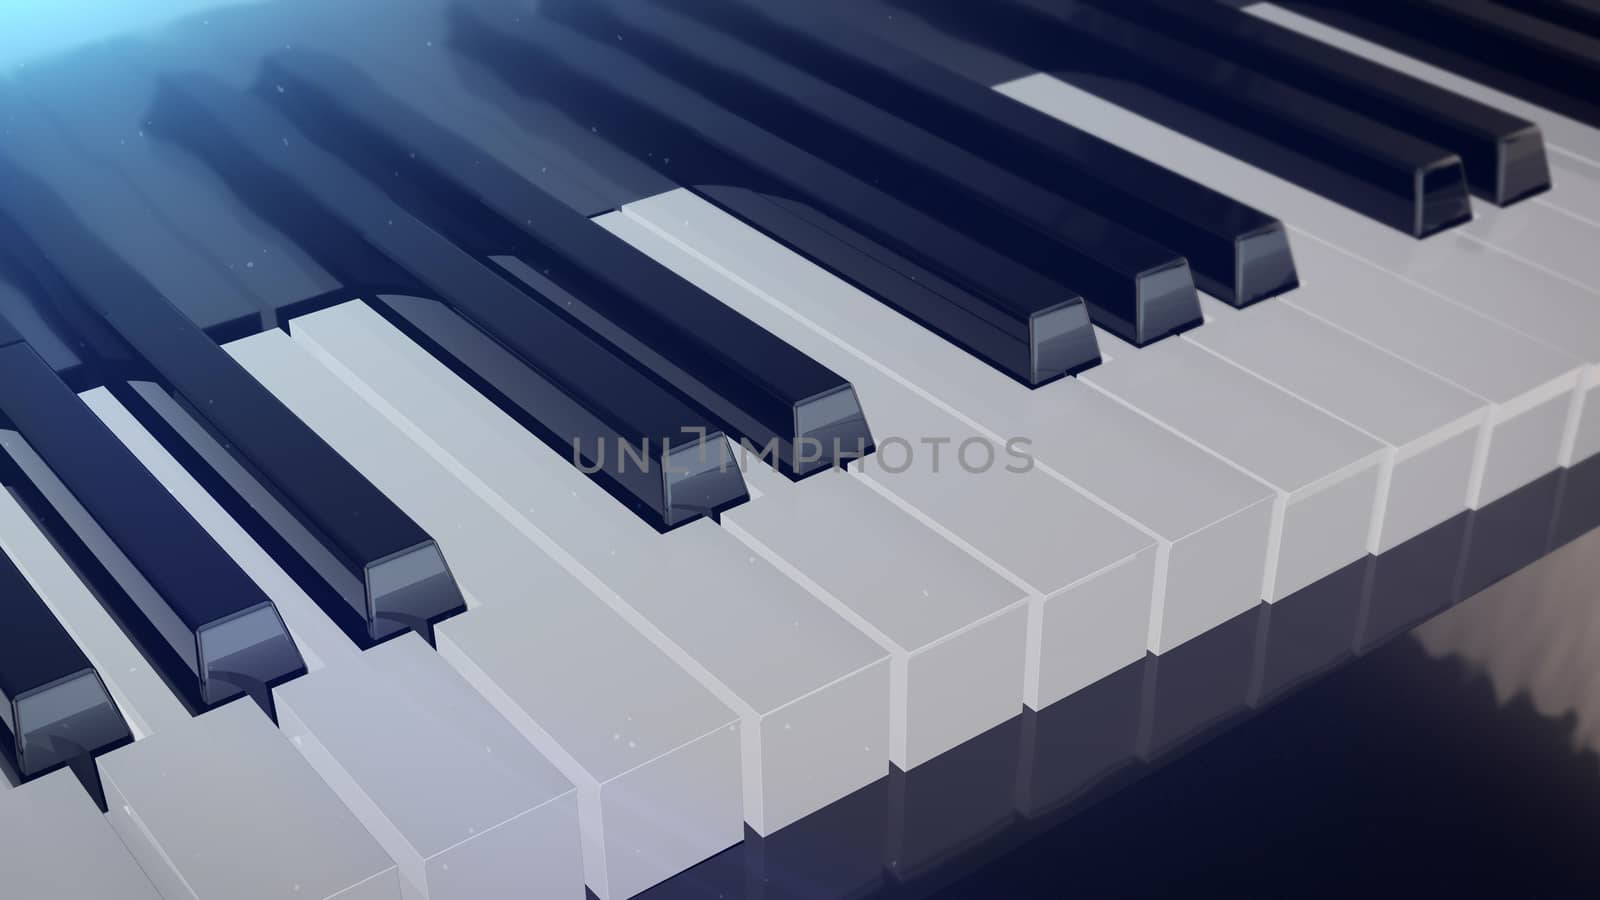 Grand Piano Keys by klss